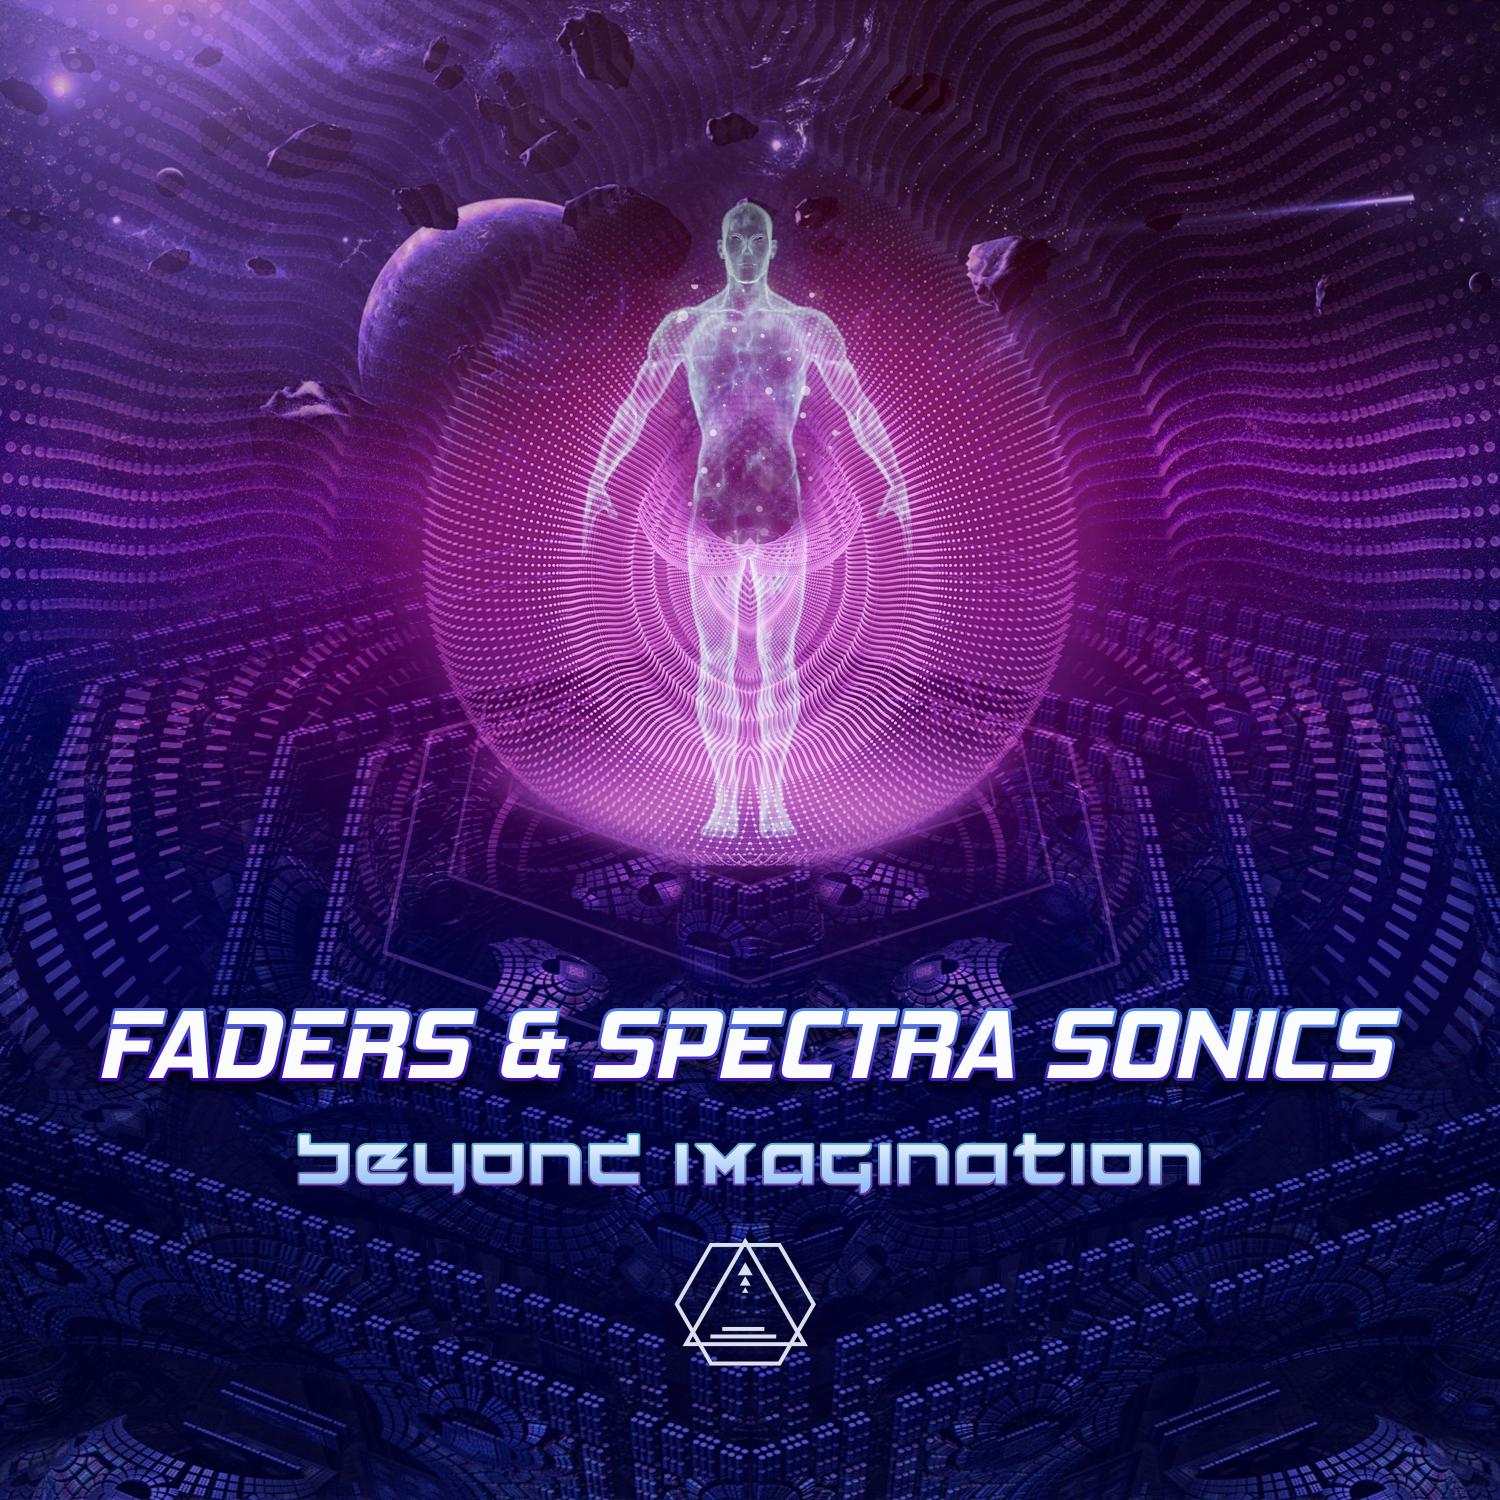 Faders - Beyond Imagination